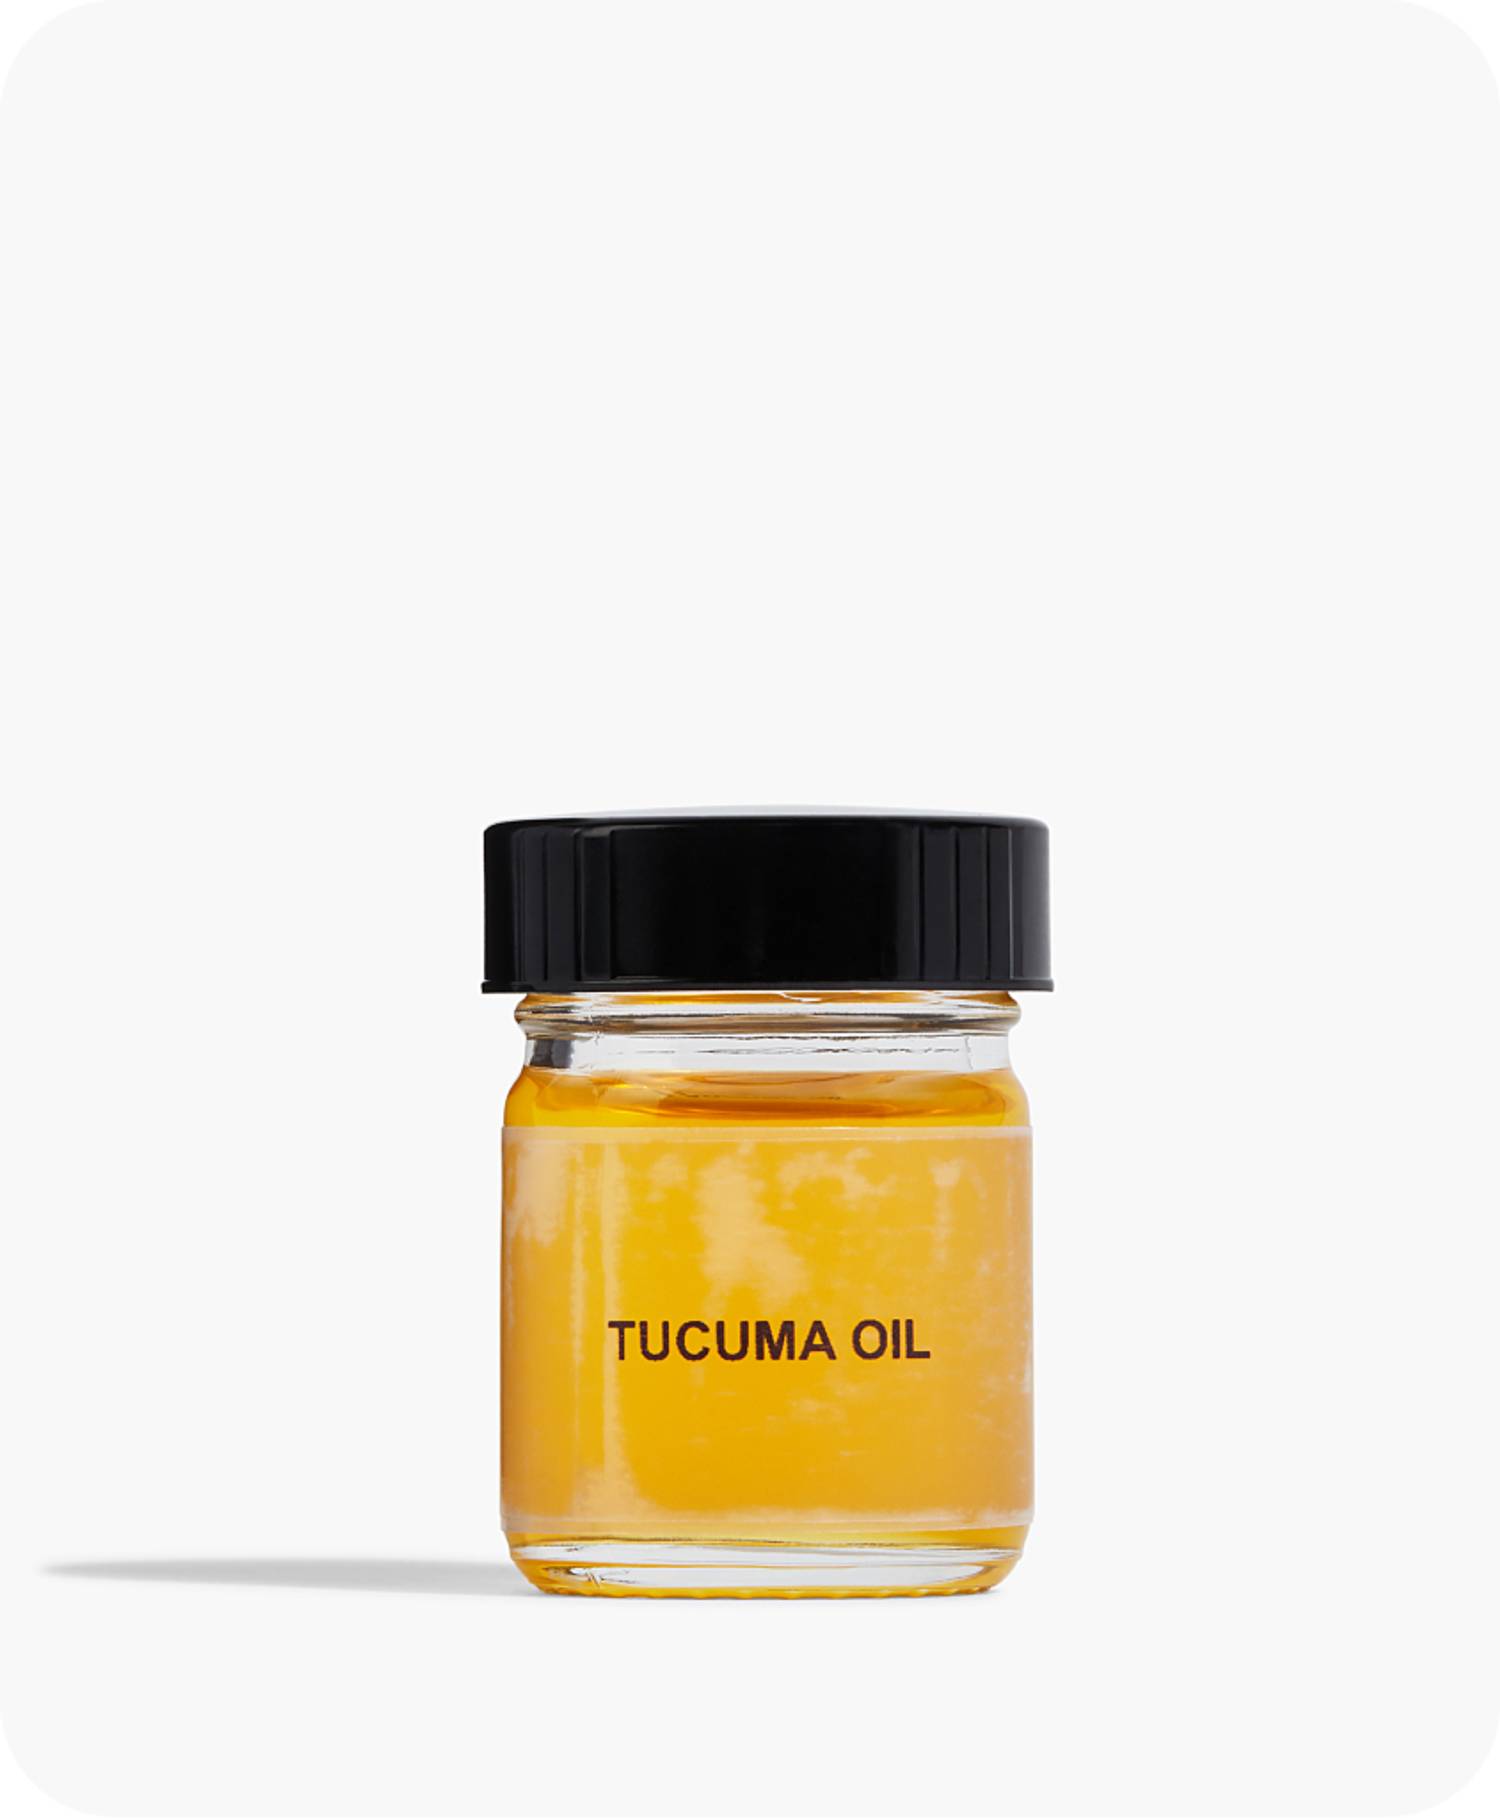 Tucuma Seed Oil in natural form